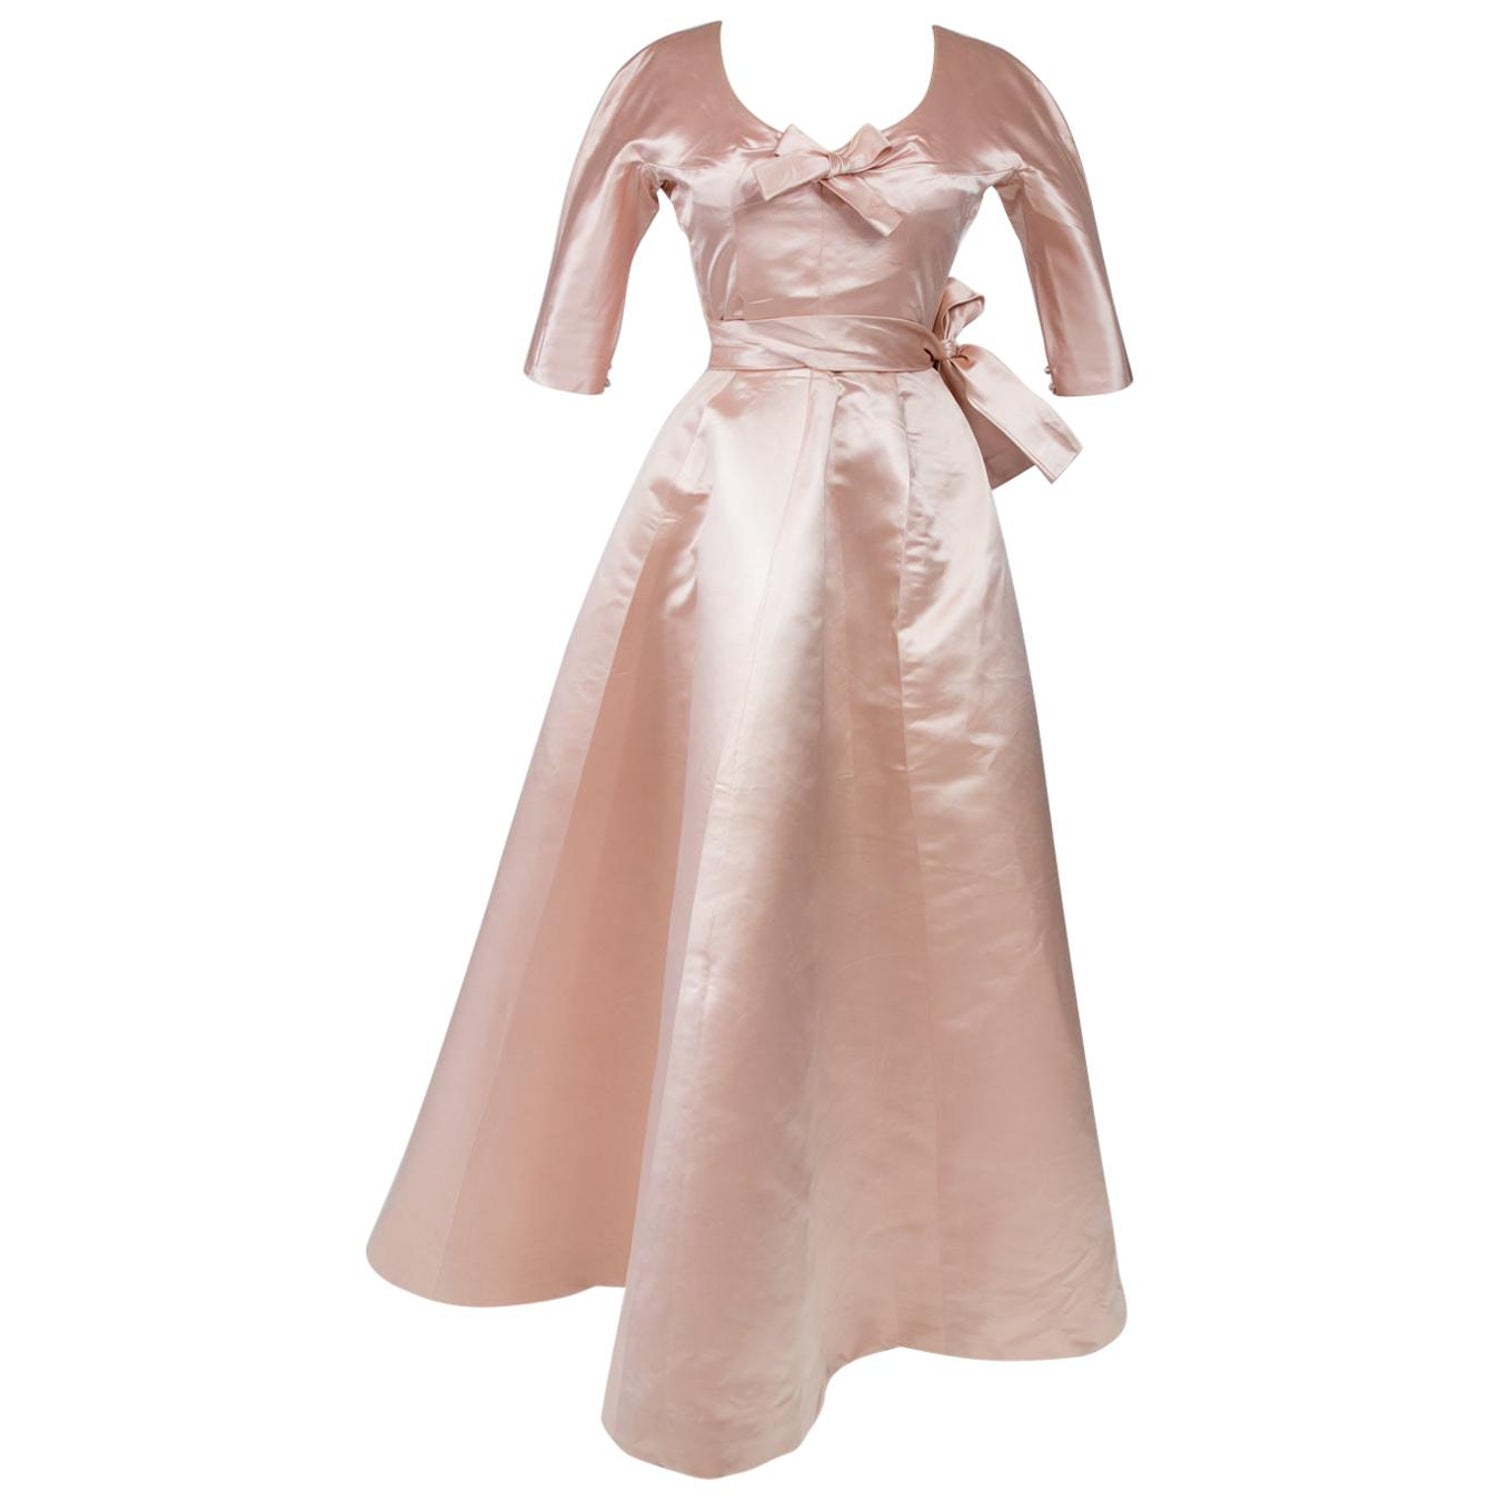 Cristobal Balenciaga Fashion: Dresses & More - 18 For Sale at 1stdibs